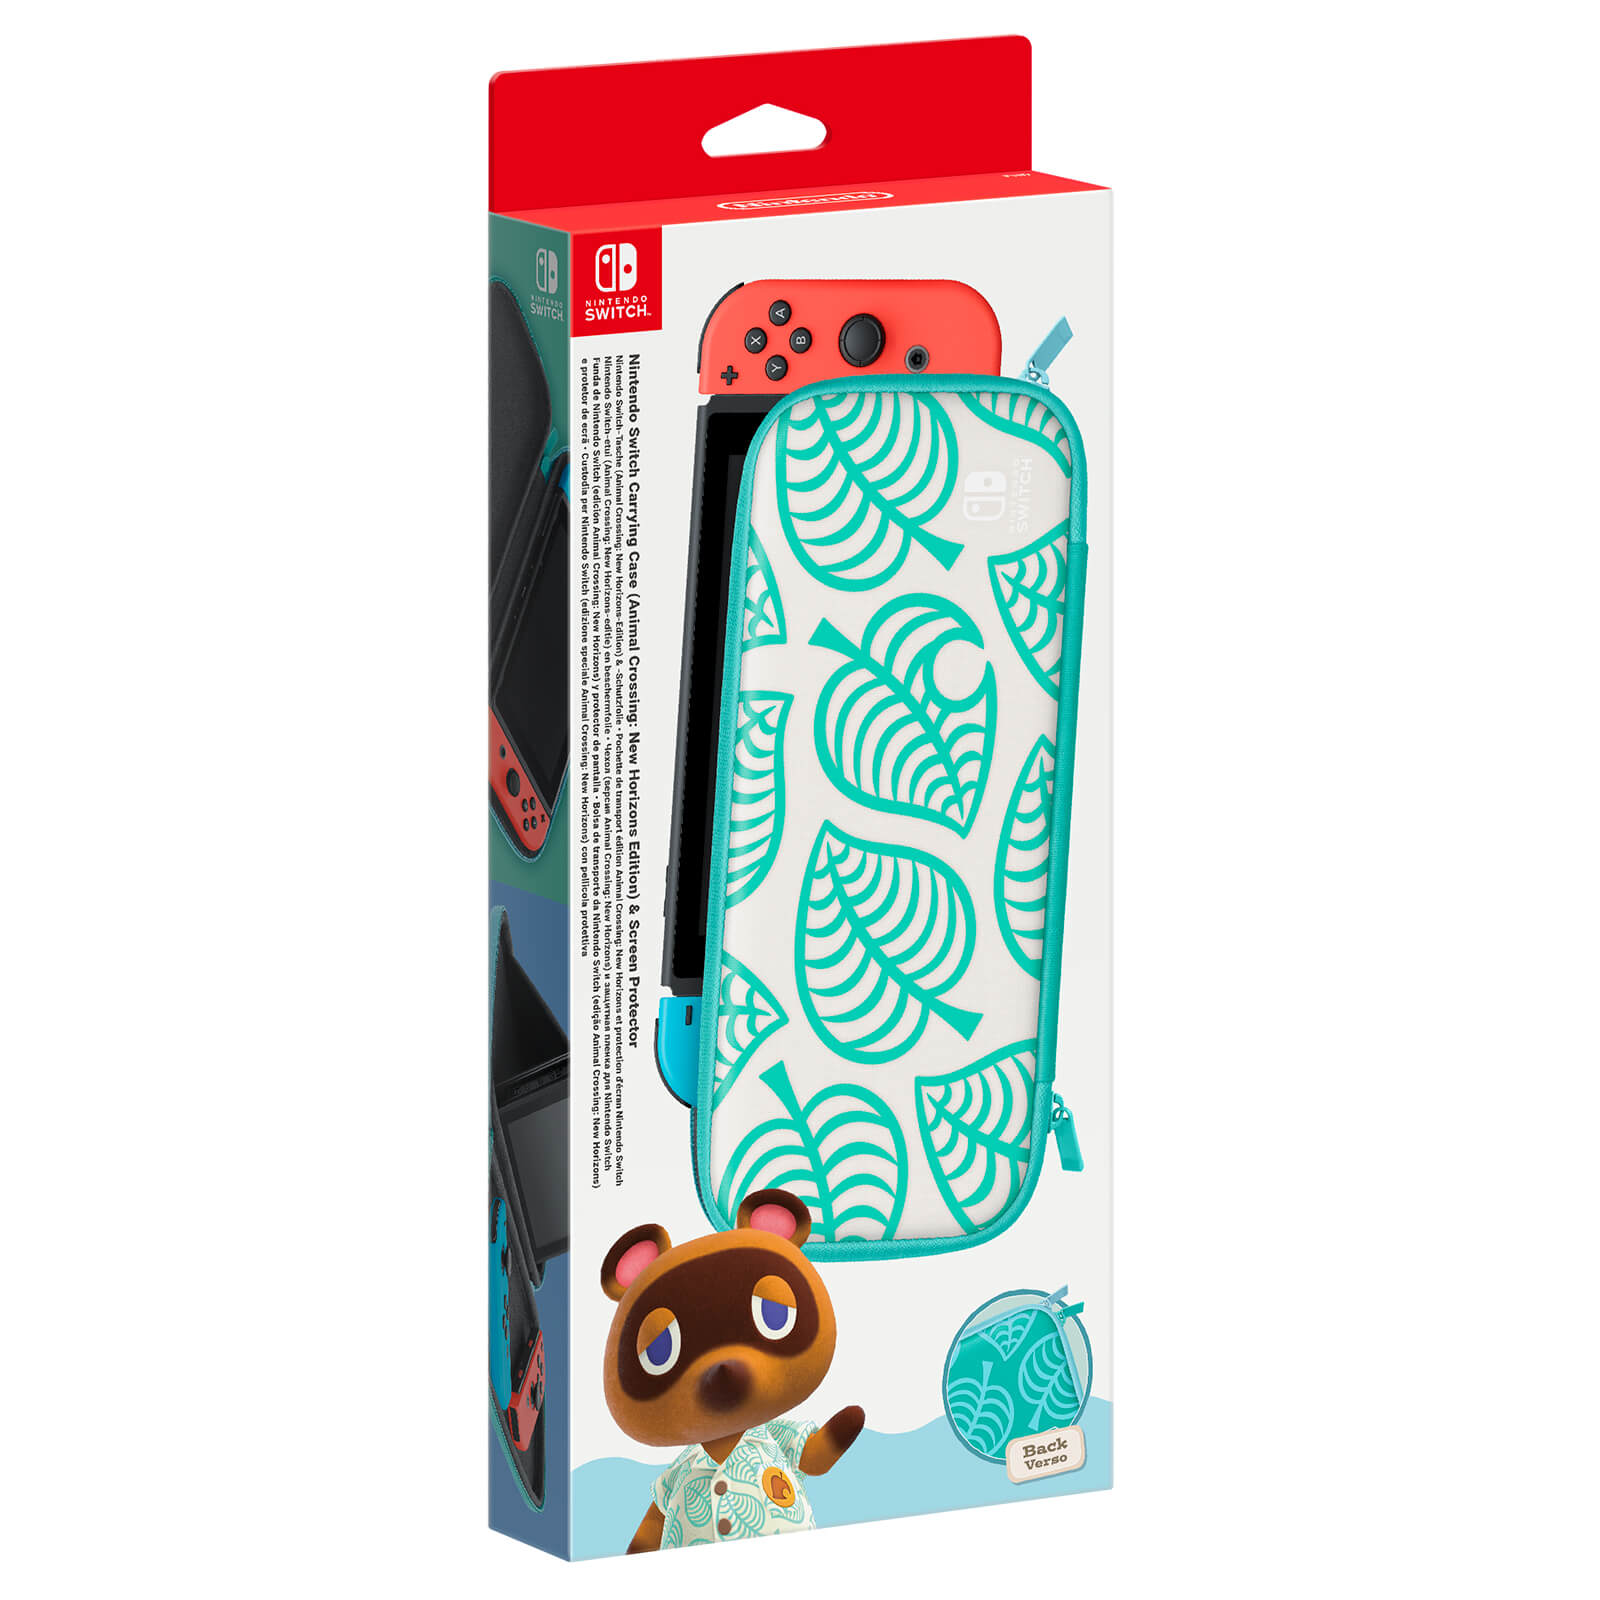 Nintendo Switch Carrying Case (Animal 